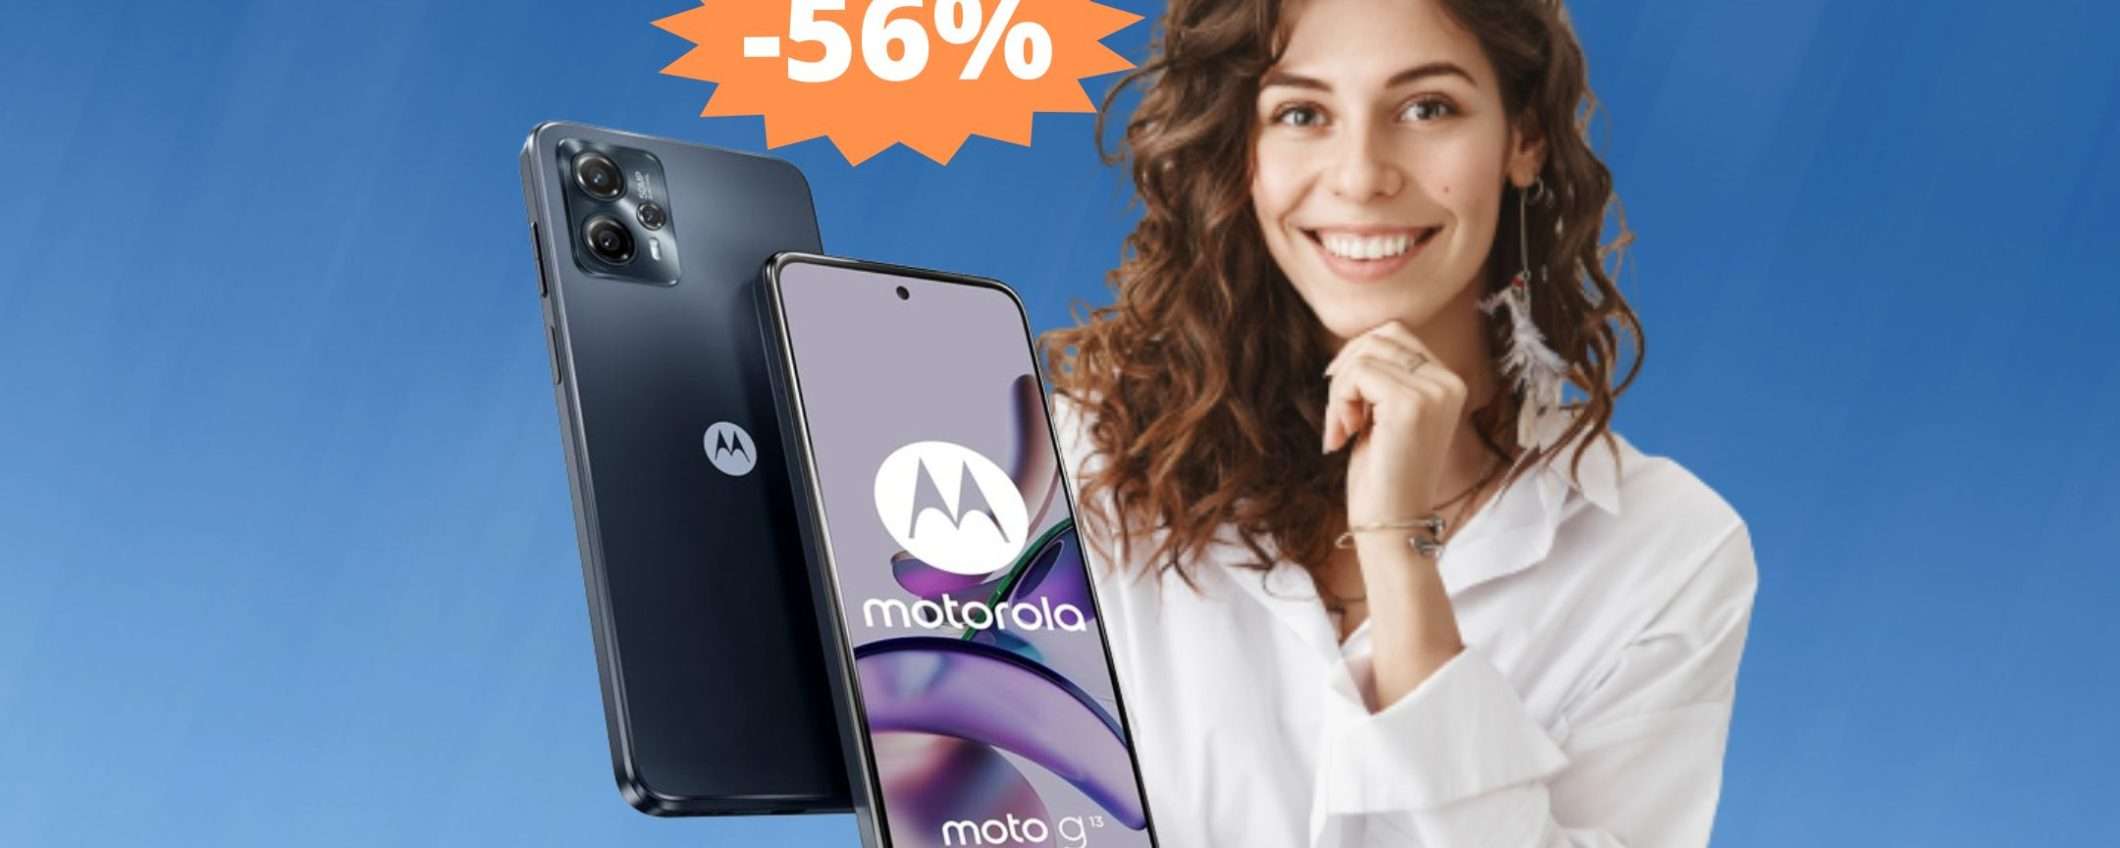 Motorola Moto g13: CROLLO del prezzo su Amazon (-56%)